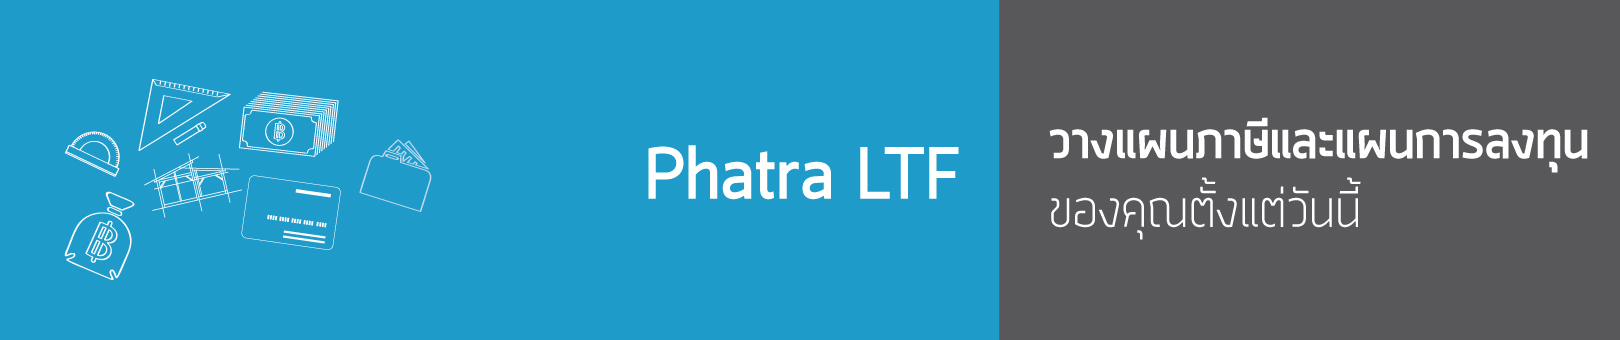 phatra-LTF-product-detail-banner